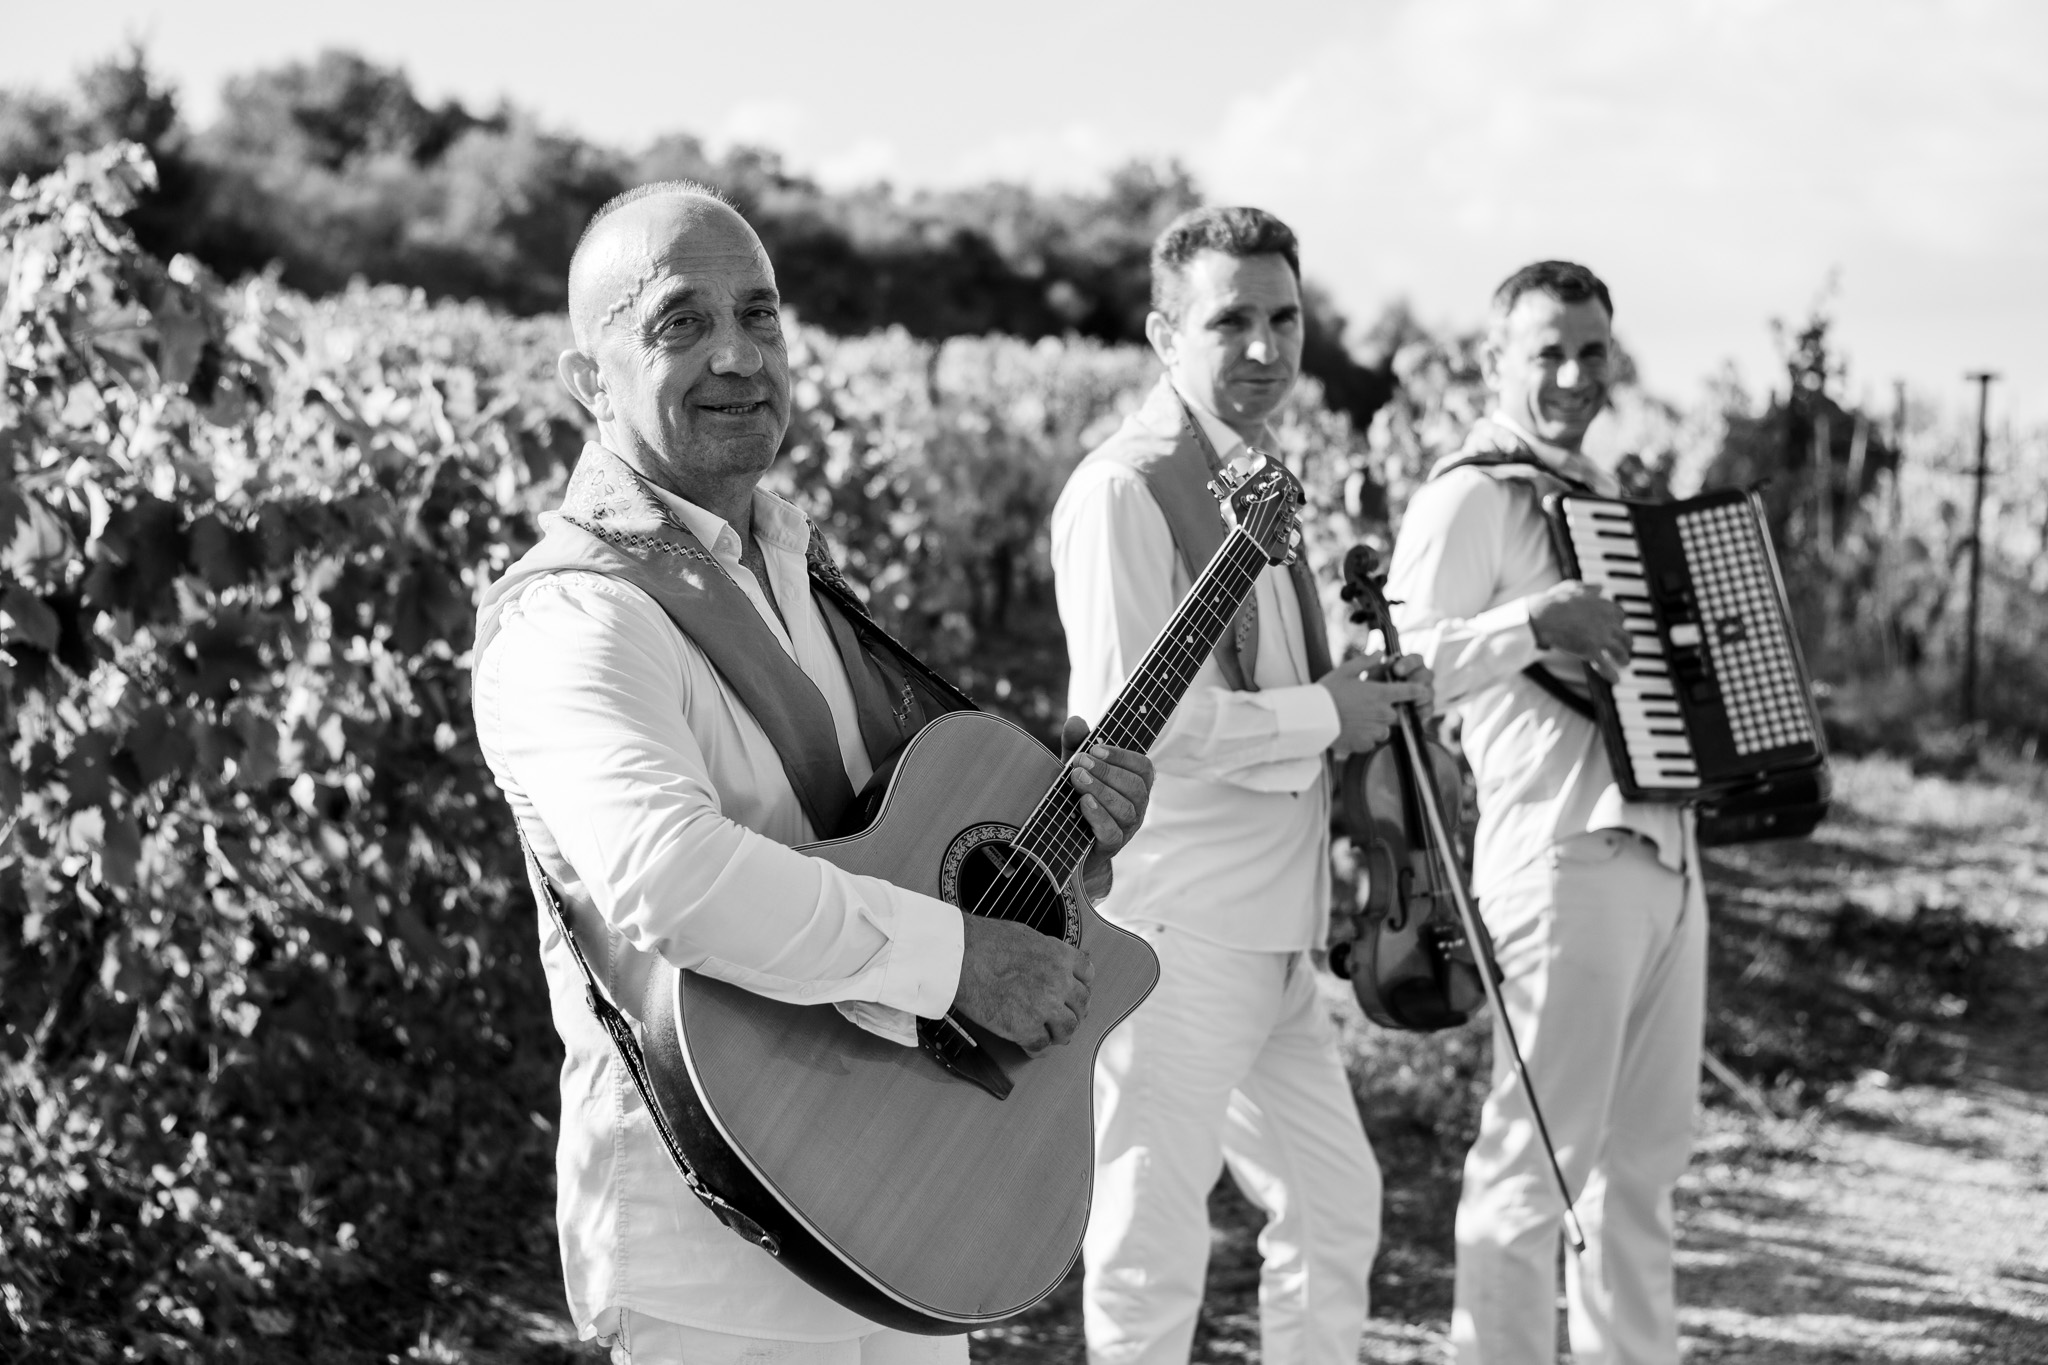 Alkinos Corfu Band stand and play next to the olive grove at Ambelonas Vineyard, Corfu